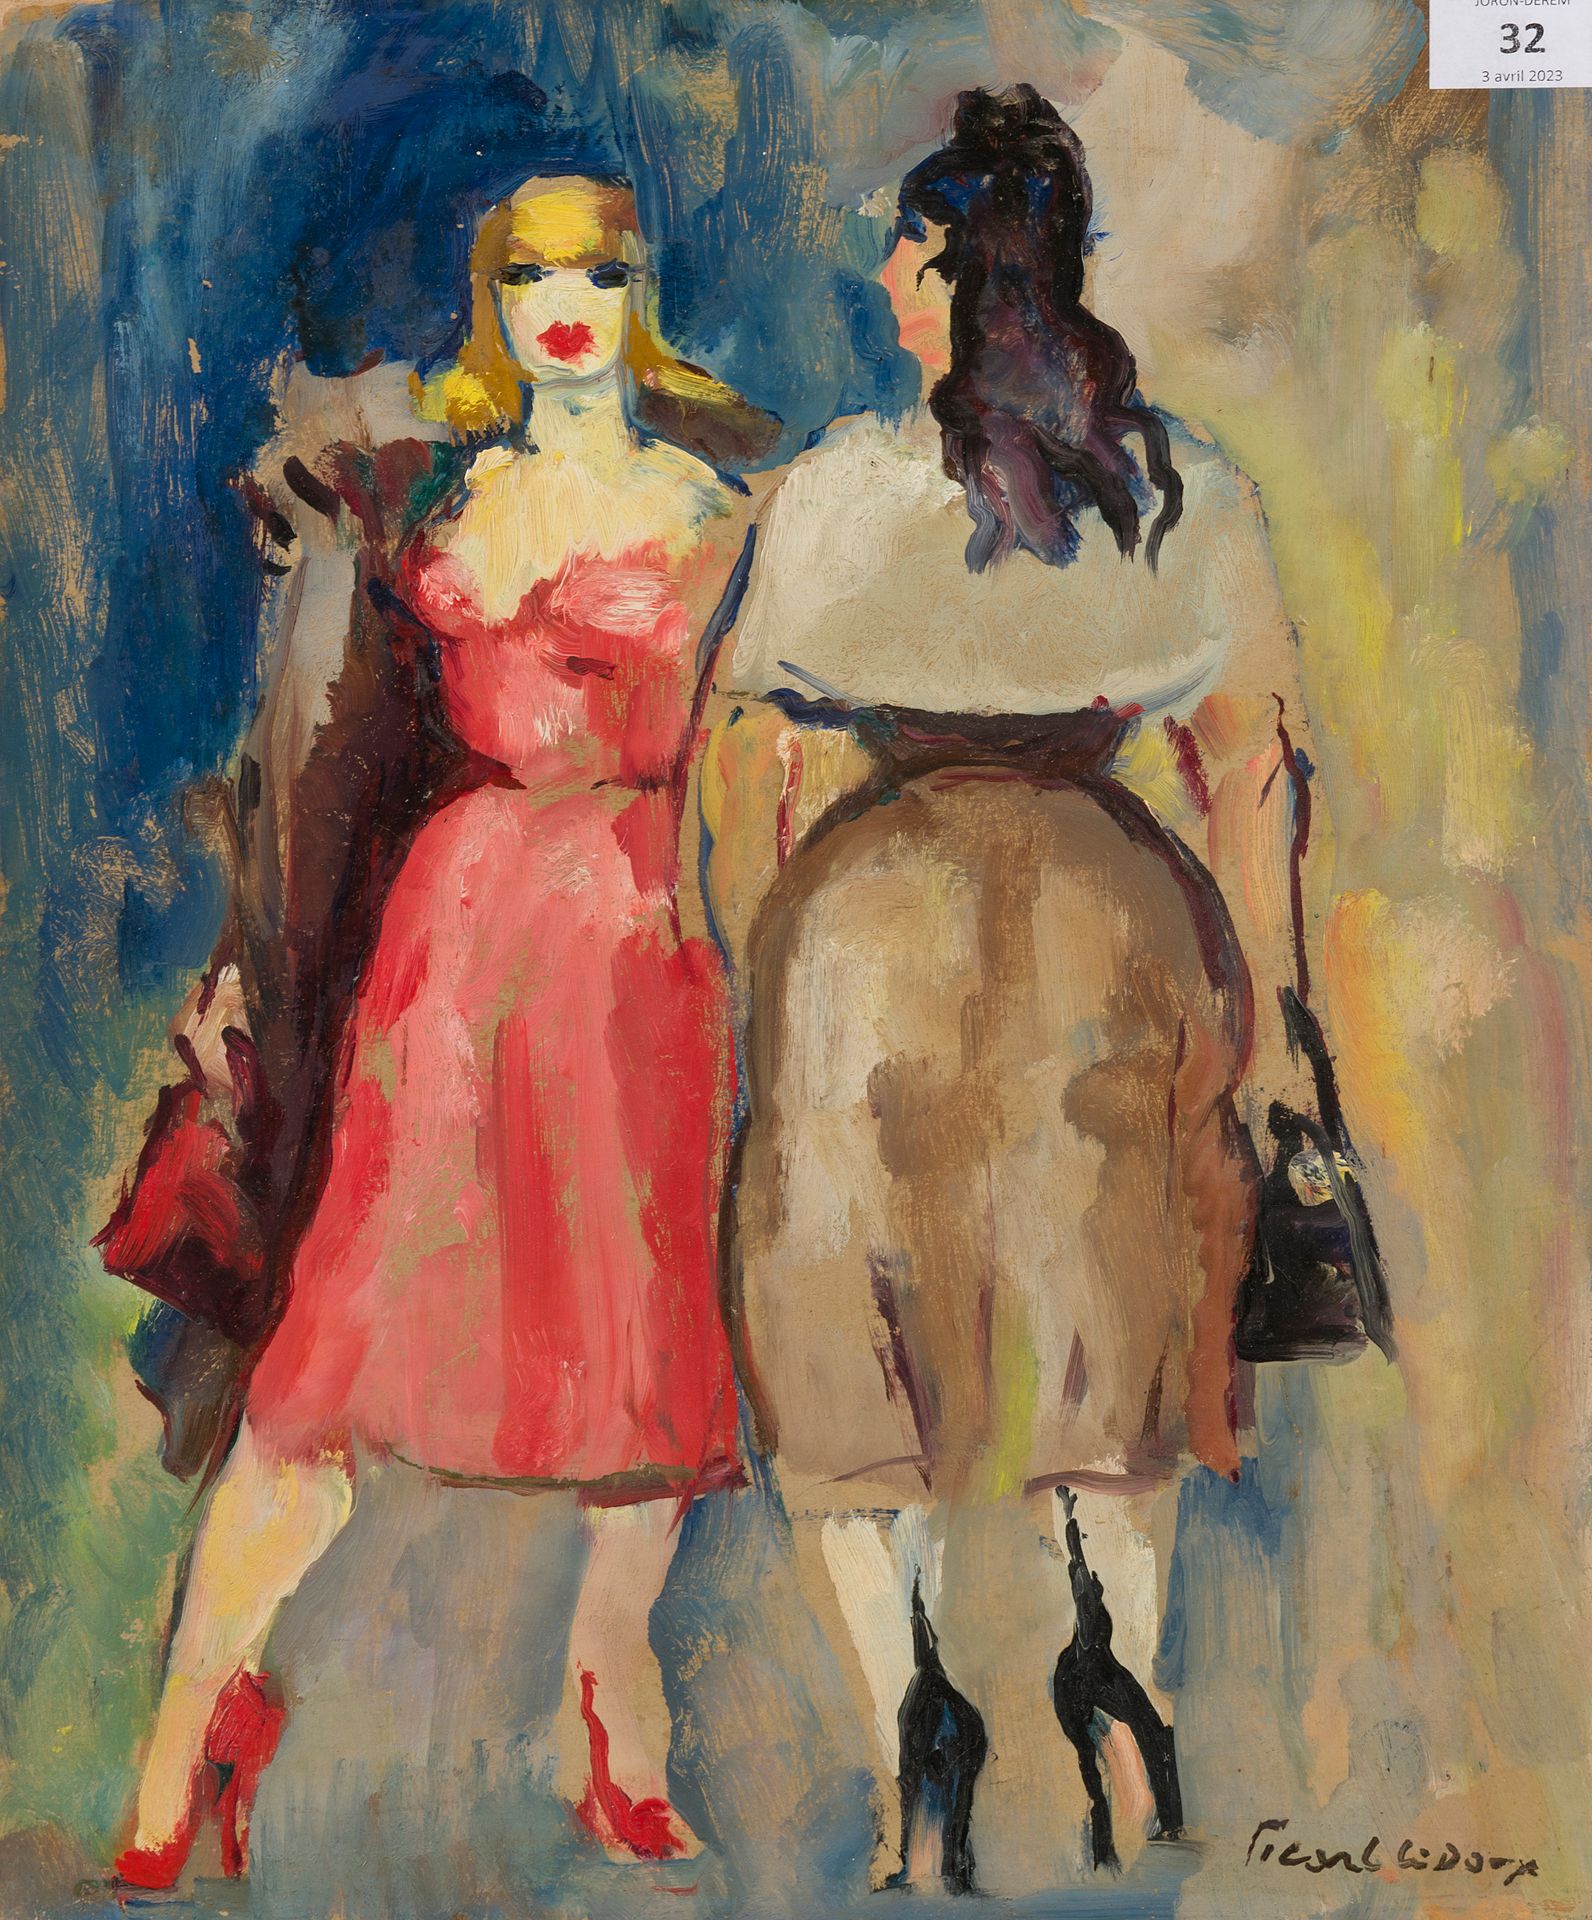 Null 查尔斯-皮卡特-勒杜 (1881-1959)
女孩，1947年
右下角有签名的板上油画
41 x 33 cm